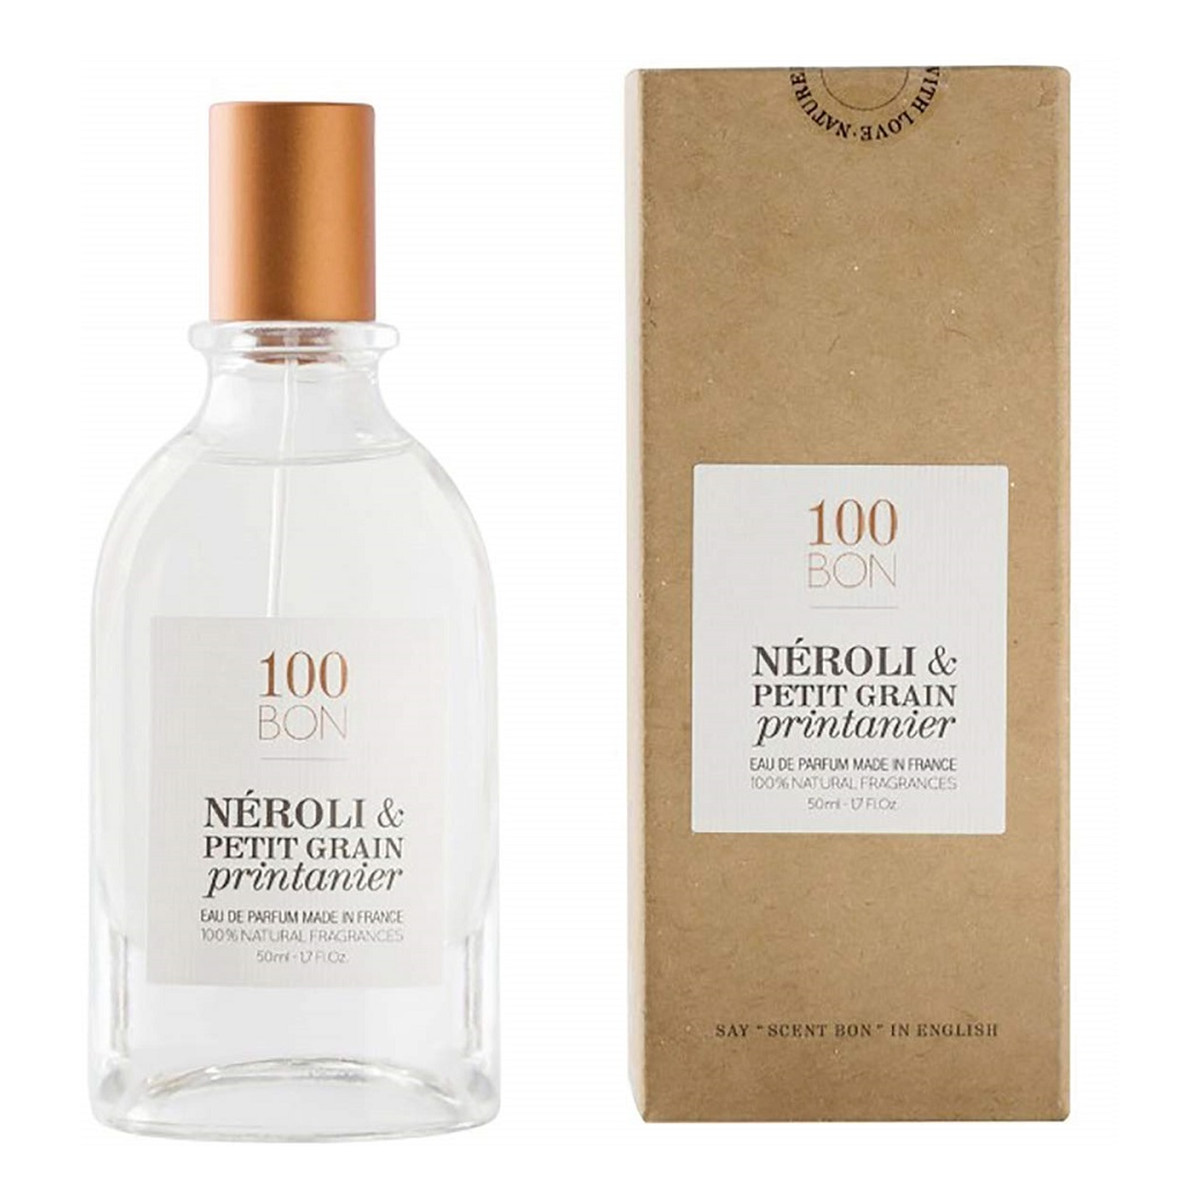 100 BON Neroli & Petit Grain Printanier EDP spray Woda Perfumowana 50ml